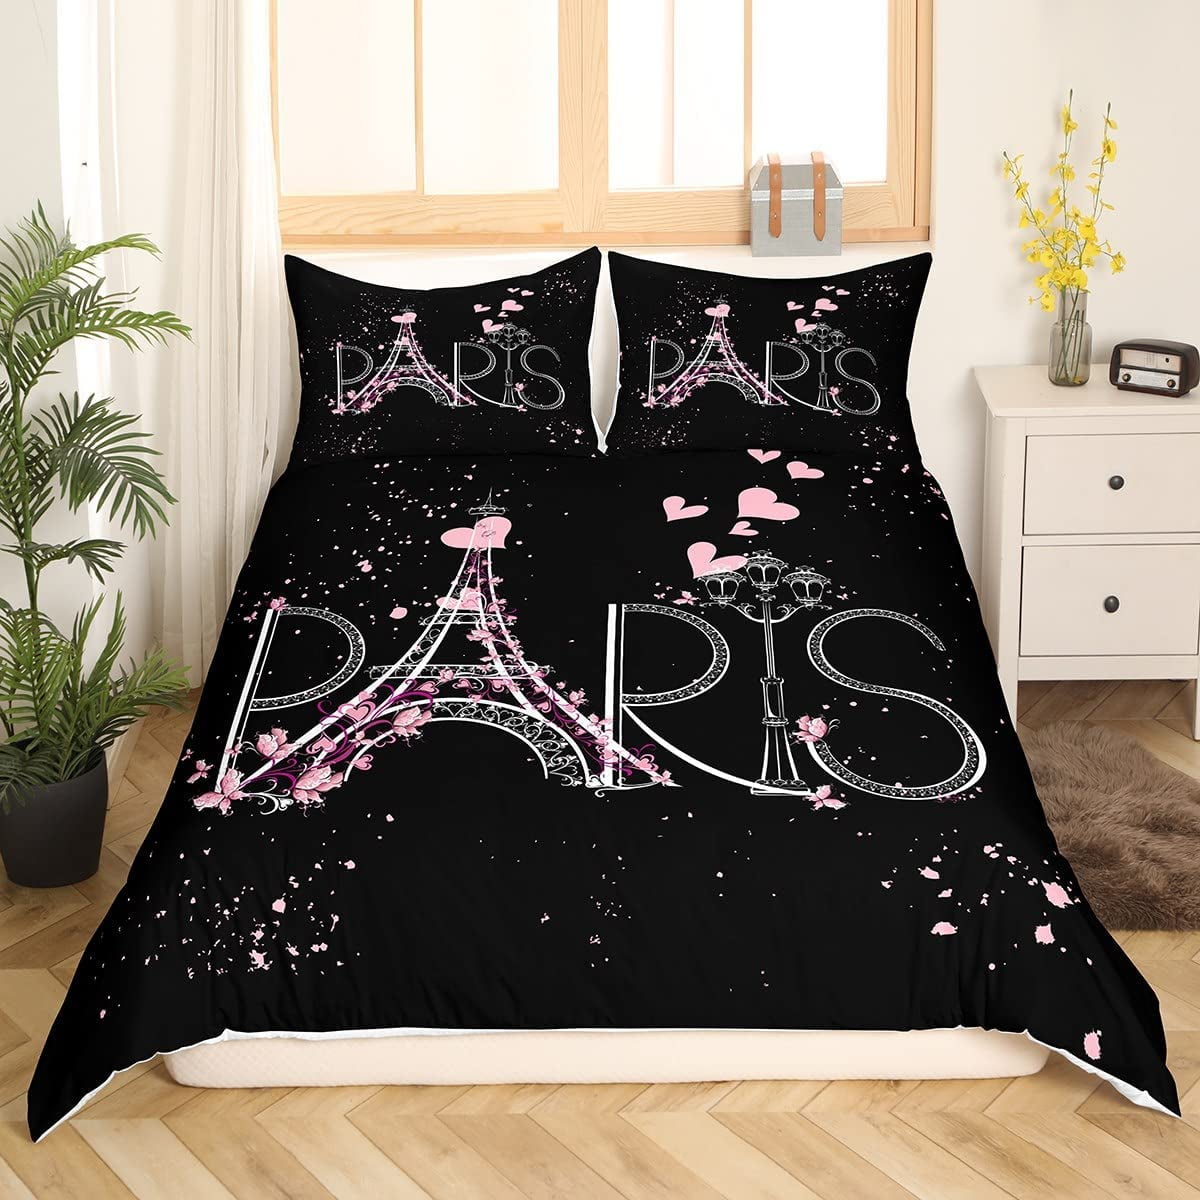 Paris Comforter Cover Set Queen Size Eiffel Tower Bedding Set Kids Girls  Black and Pink Chic Paris Bedroom Decor Duvet Cover Boys Teens Women  Romantic